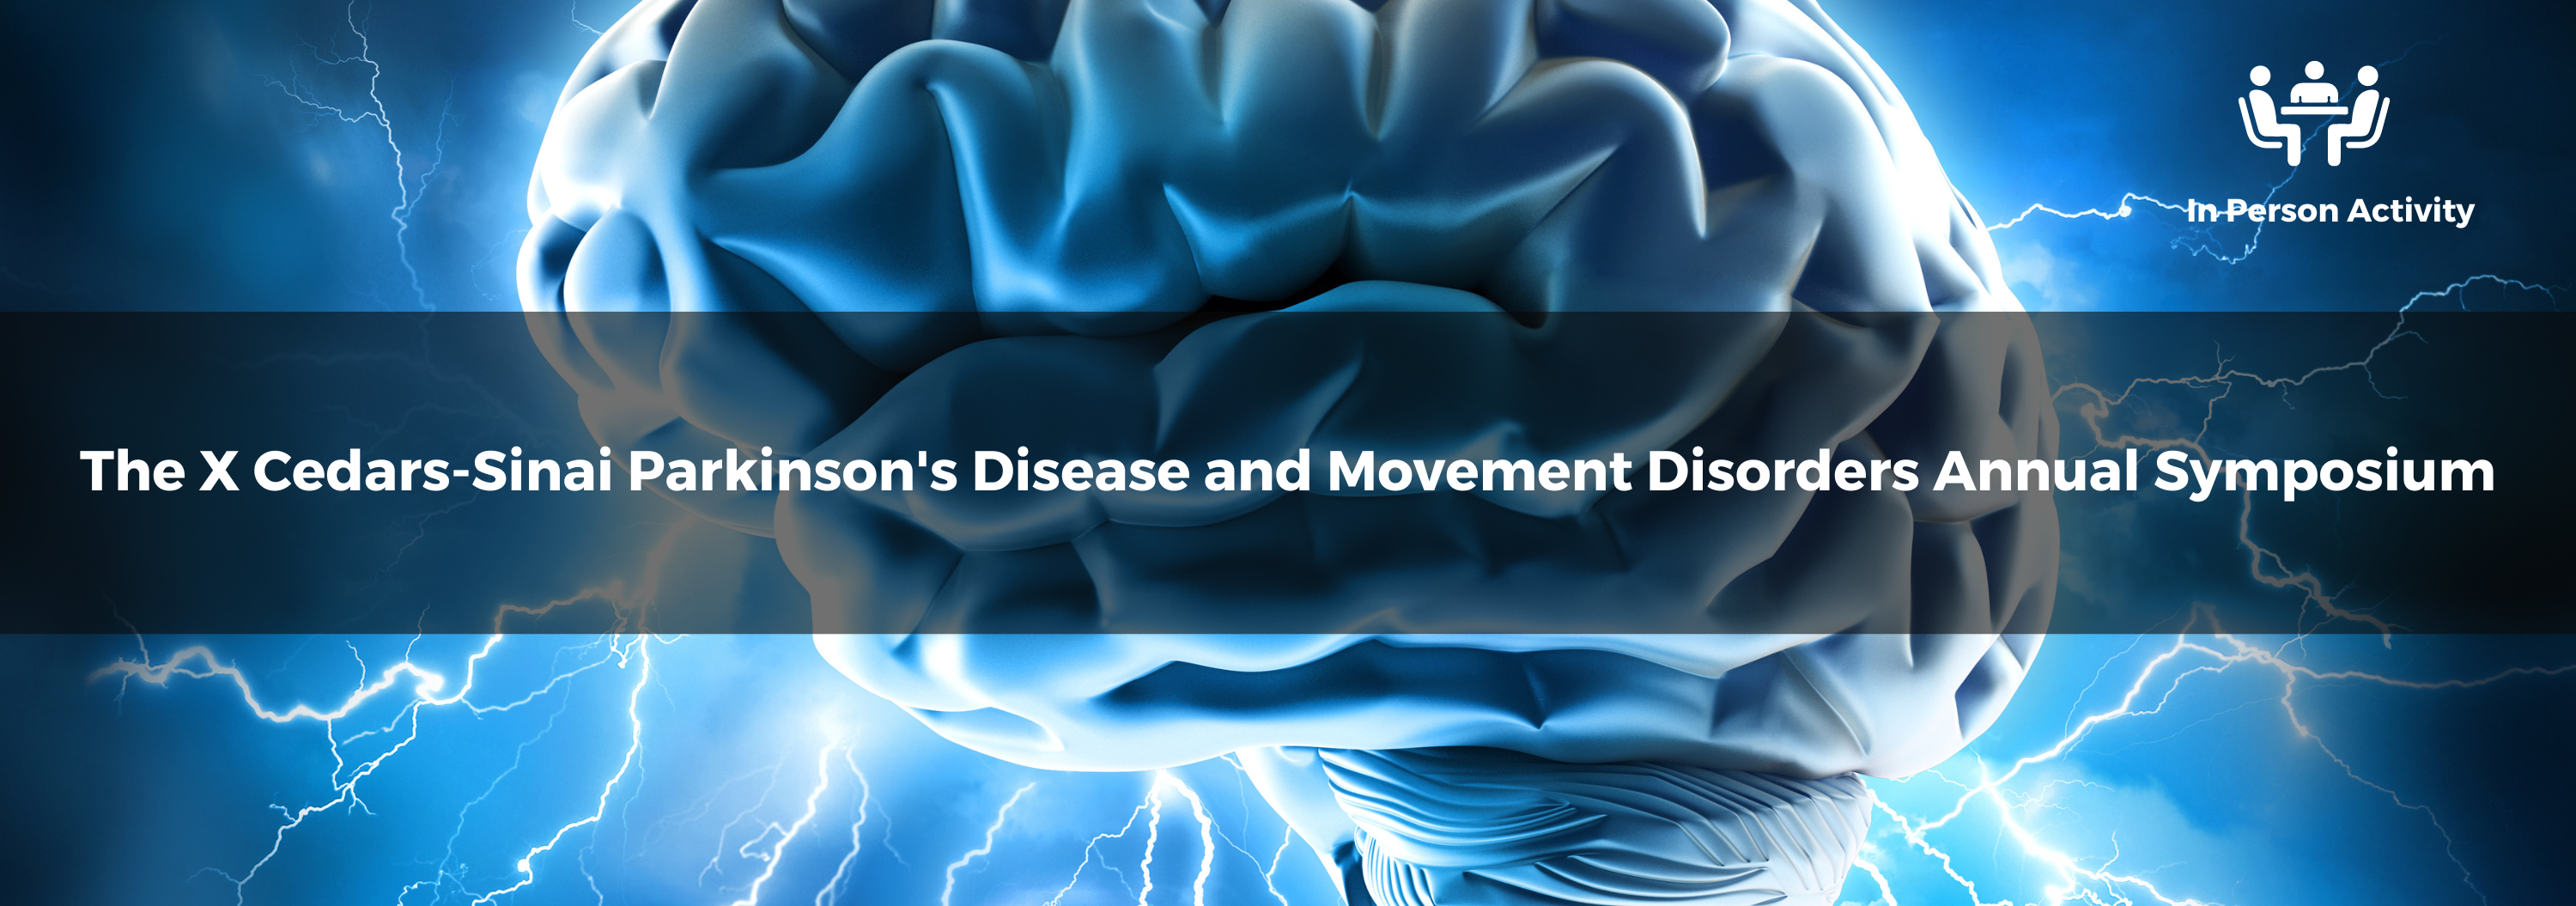 The X Cedars-Sinai Parkinson's Disease and Movement Disorders Annual Symposium Banner